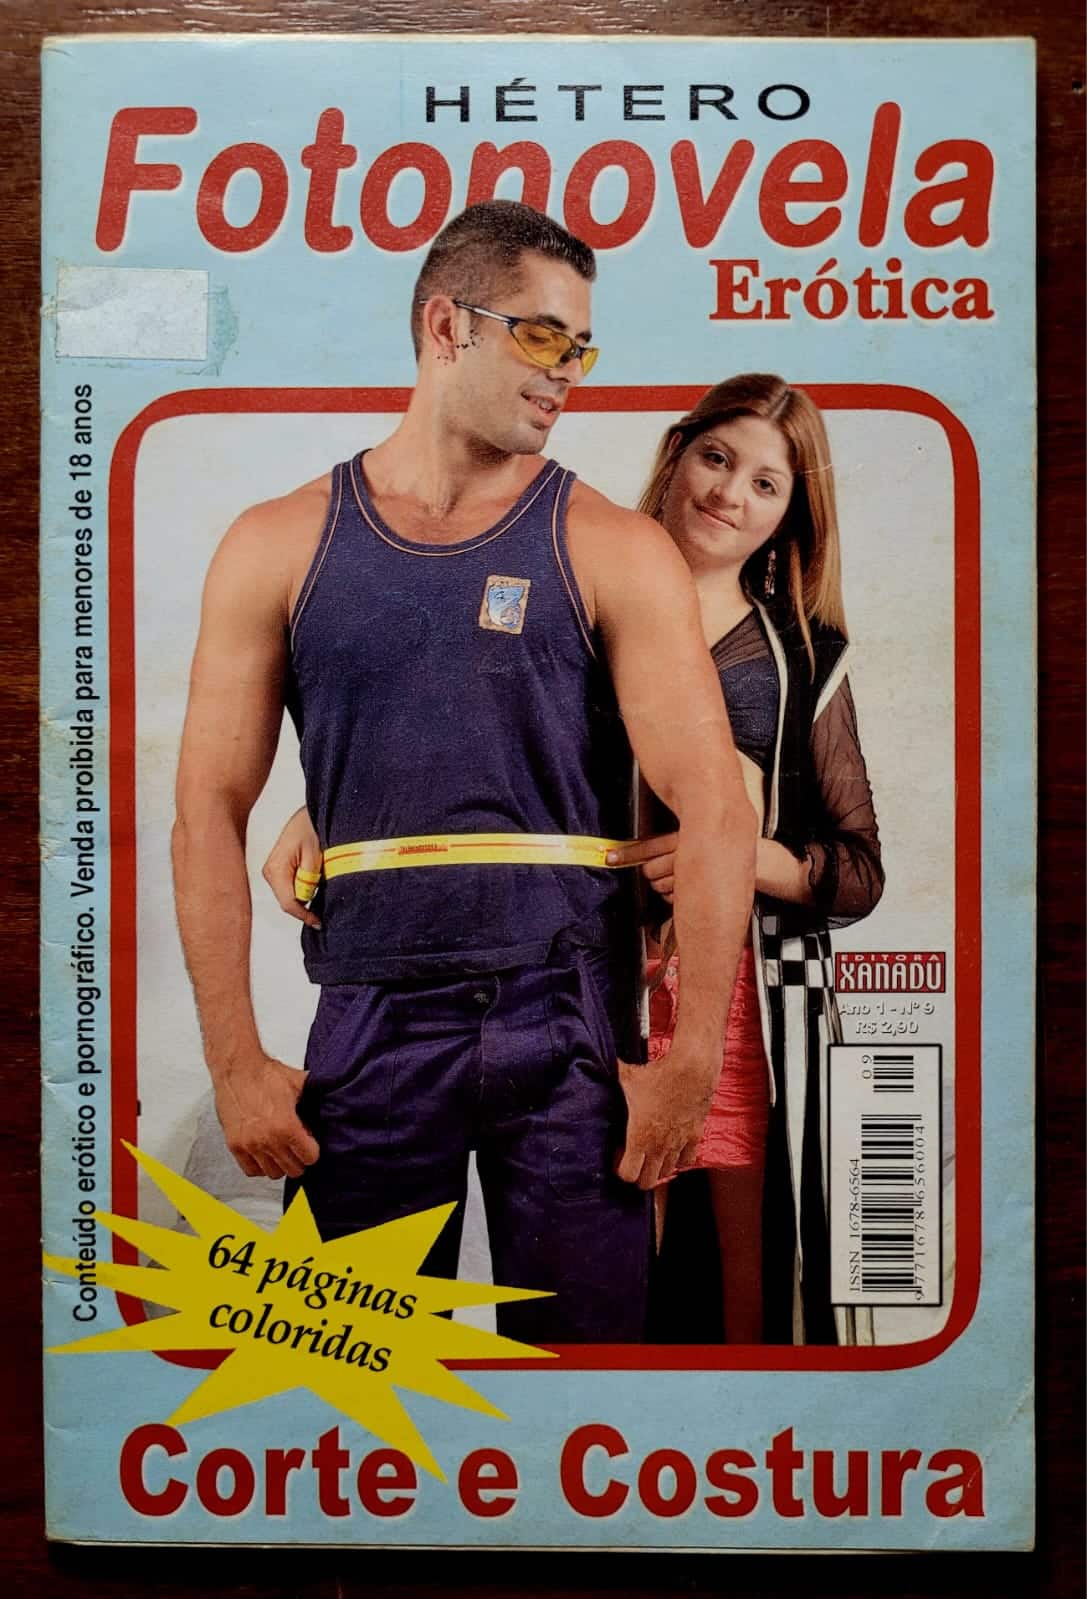 Hetero Fotonovela Erotica No 9 1 Casa do Colecionador